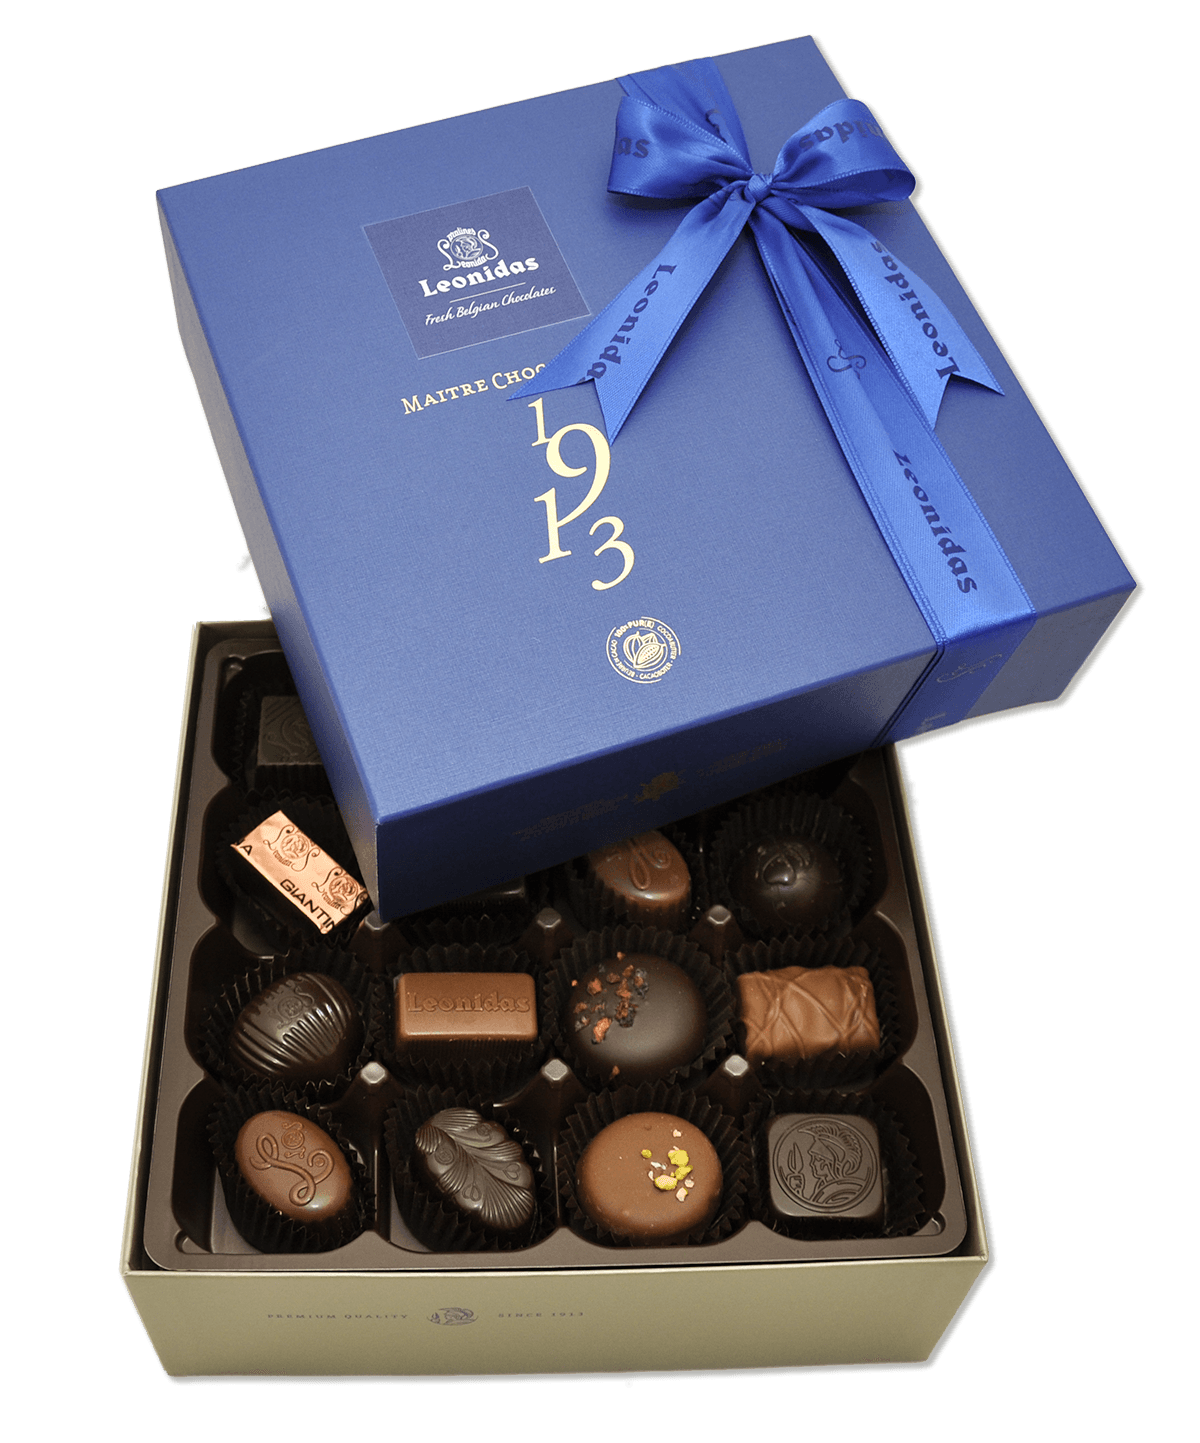 Chocolate gift box | Explosion box with chocolates |valentine's day,  birthday, anniversary gift idea - YouTube